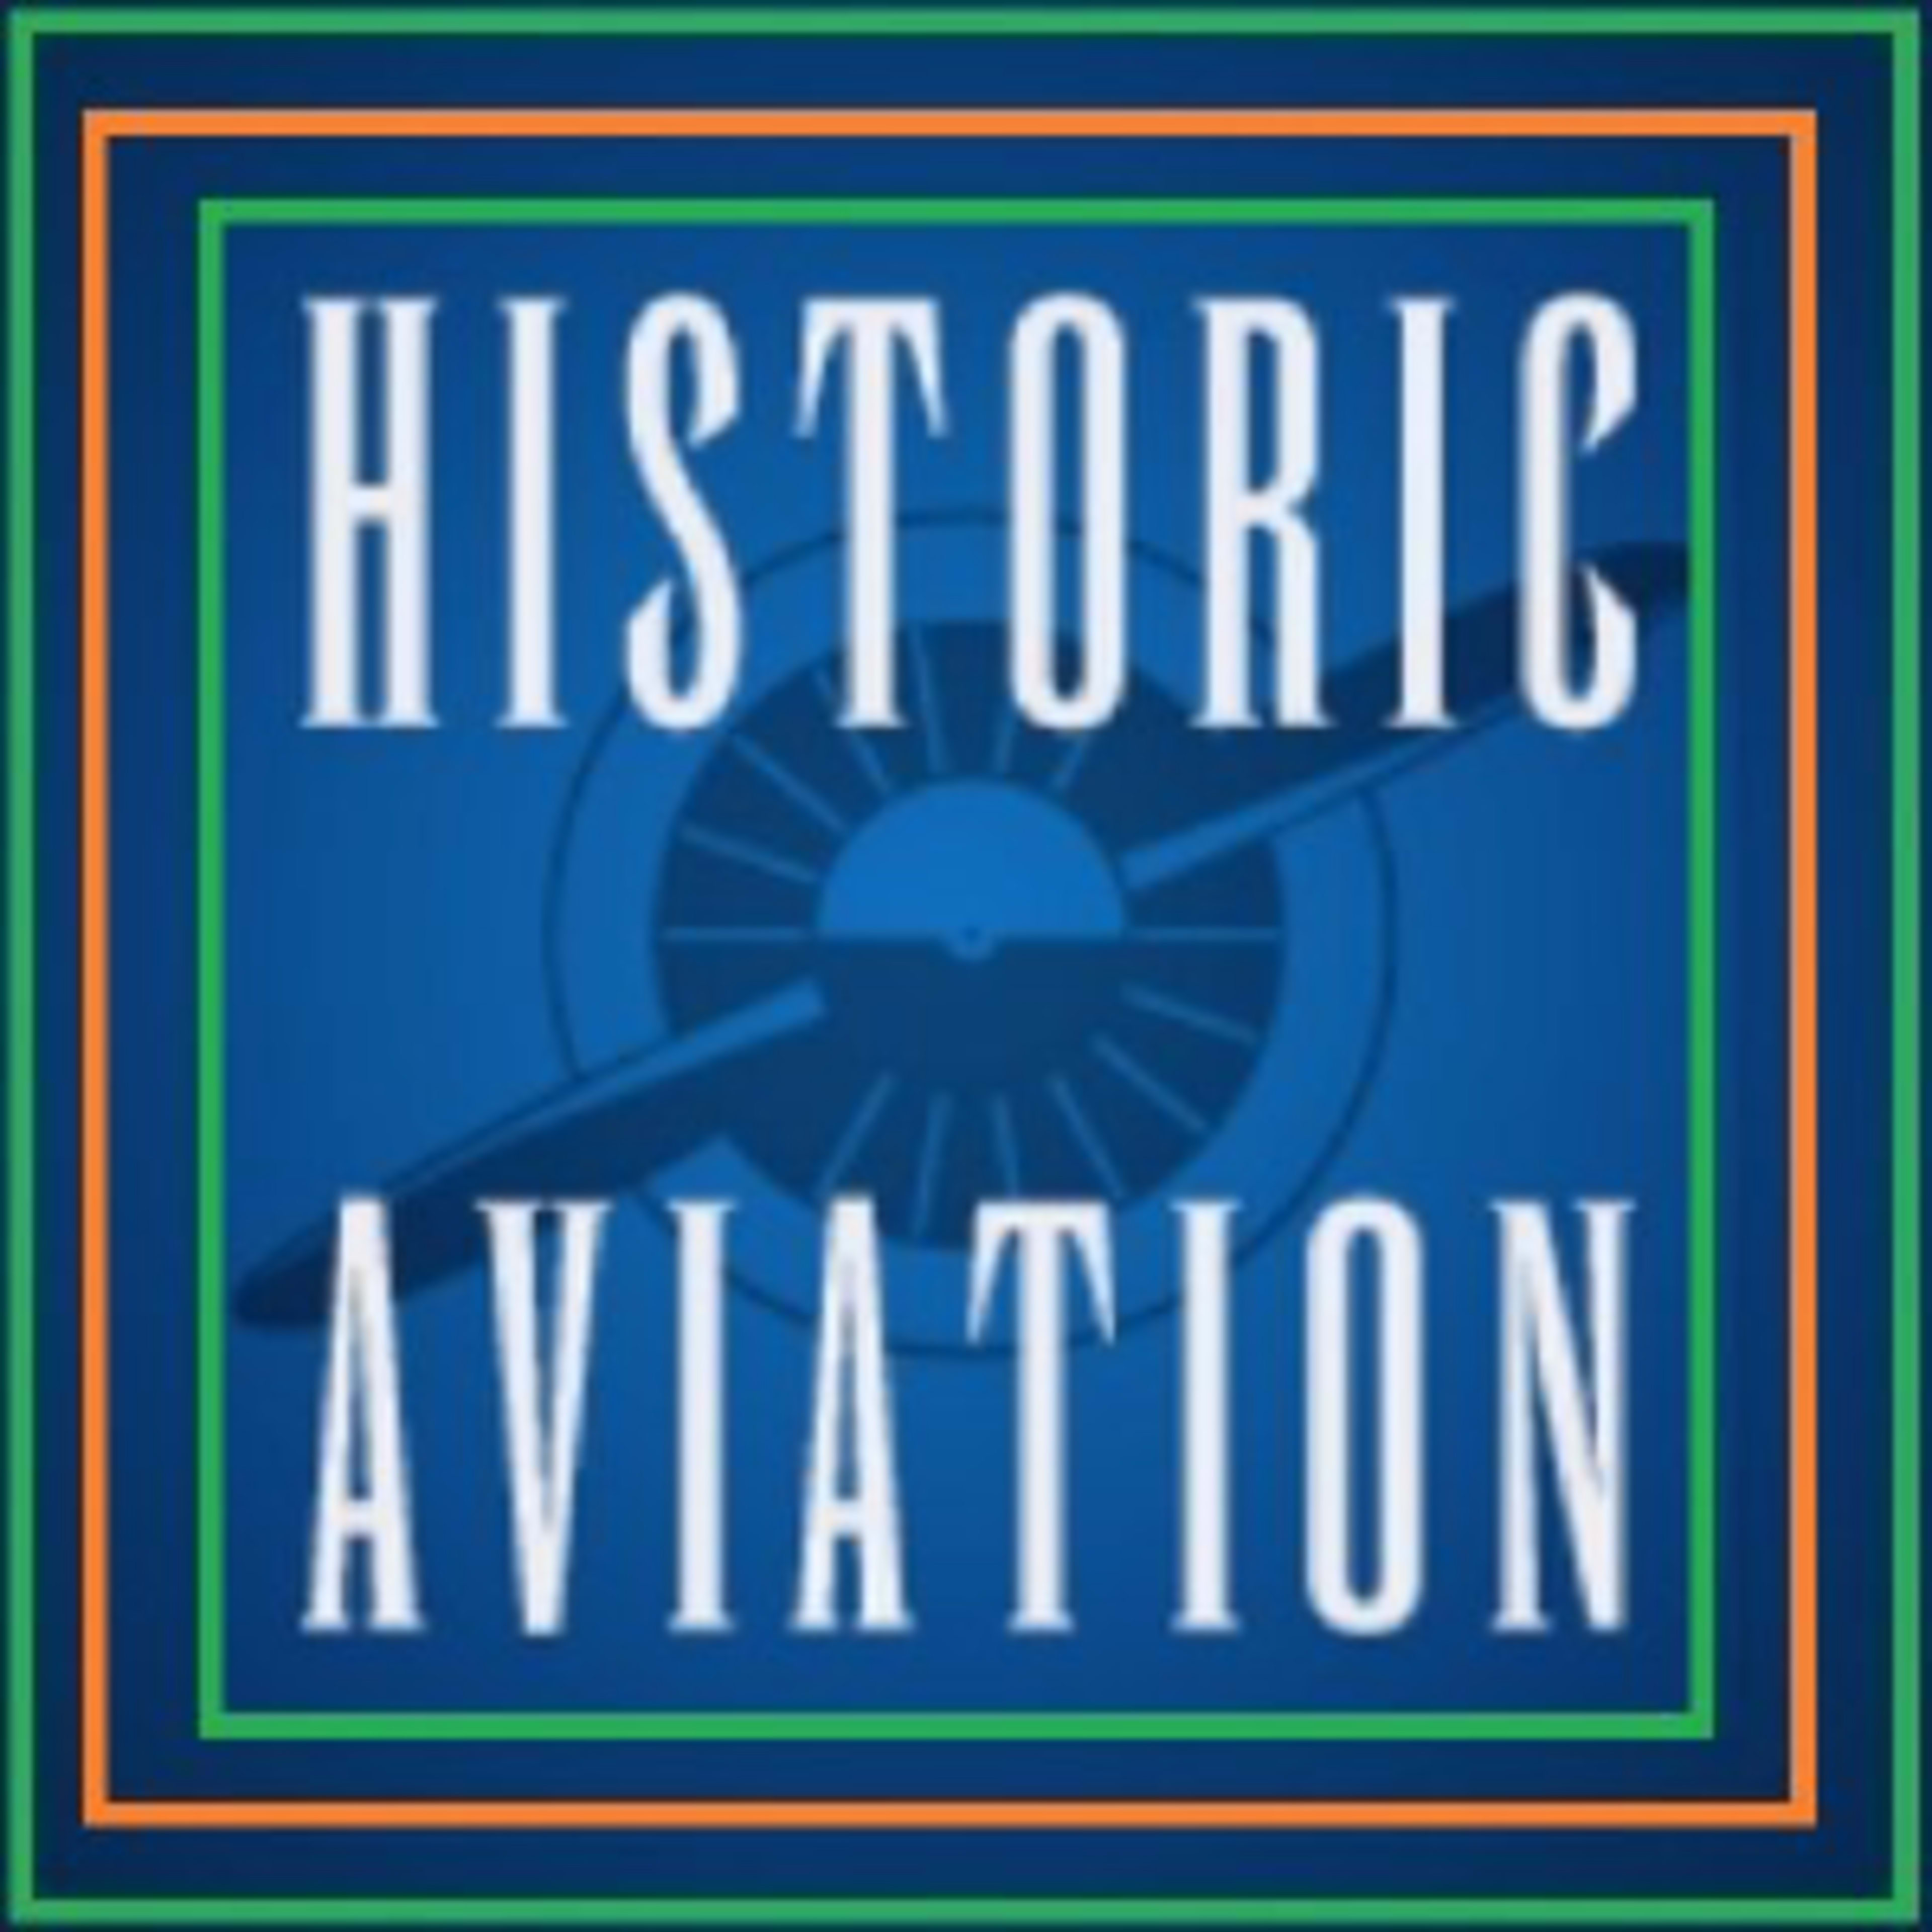 Historic AviationCode